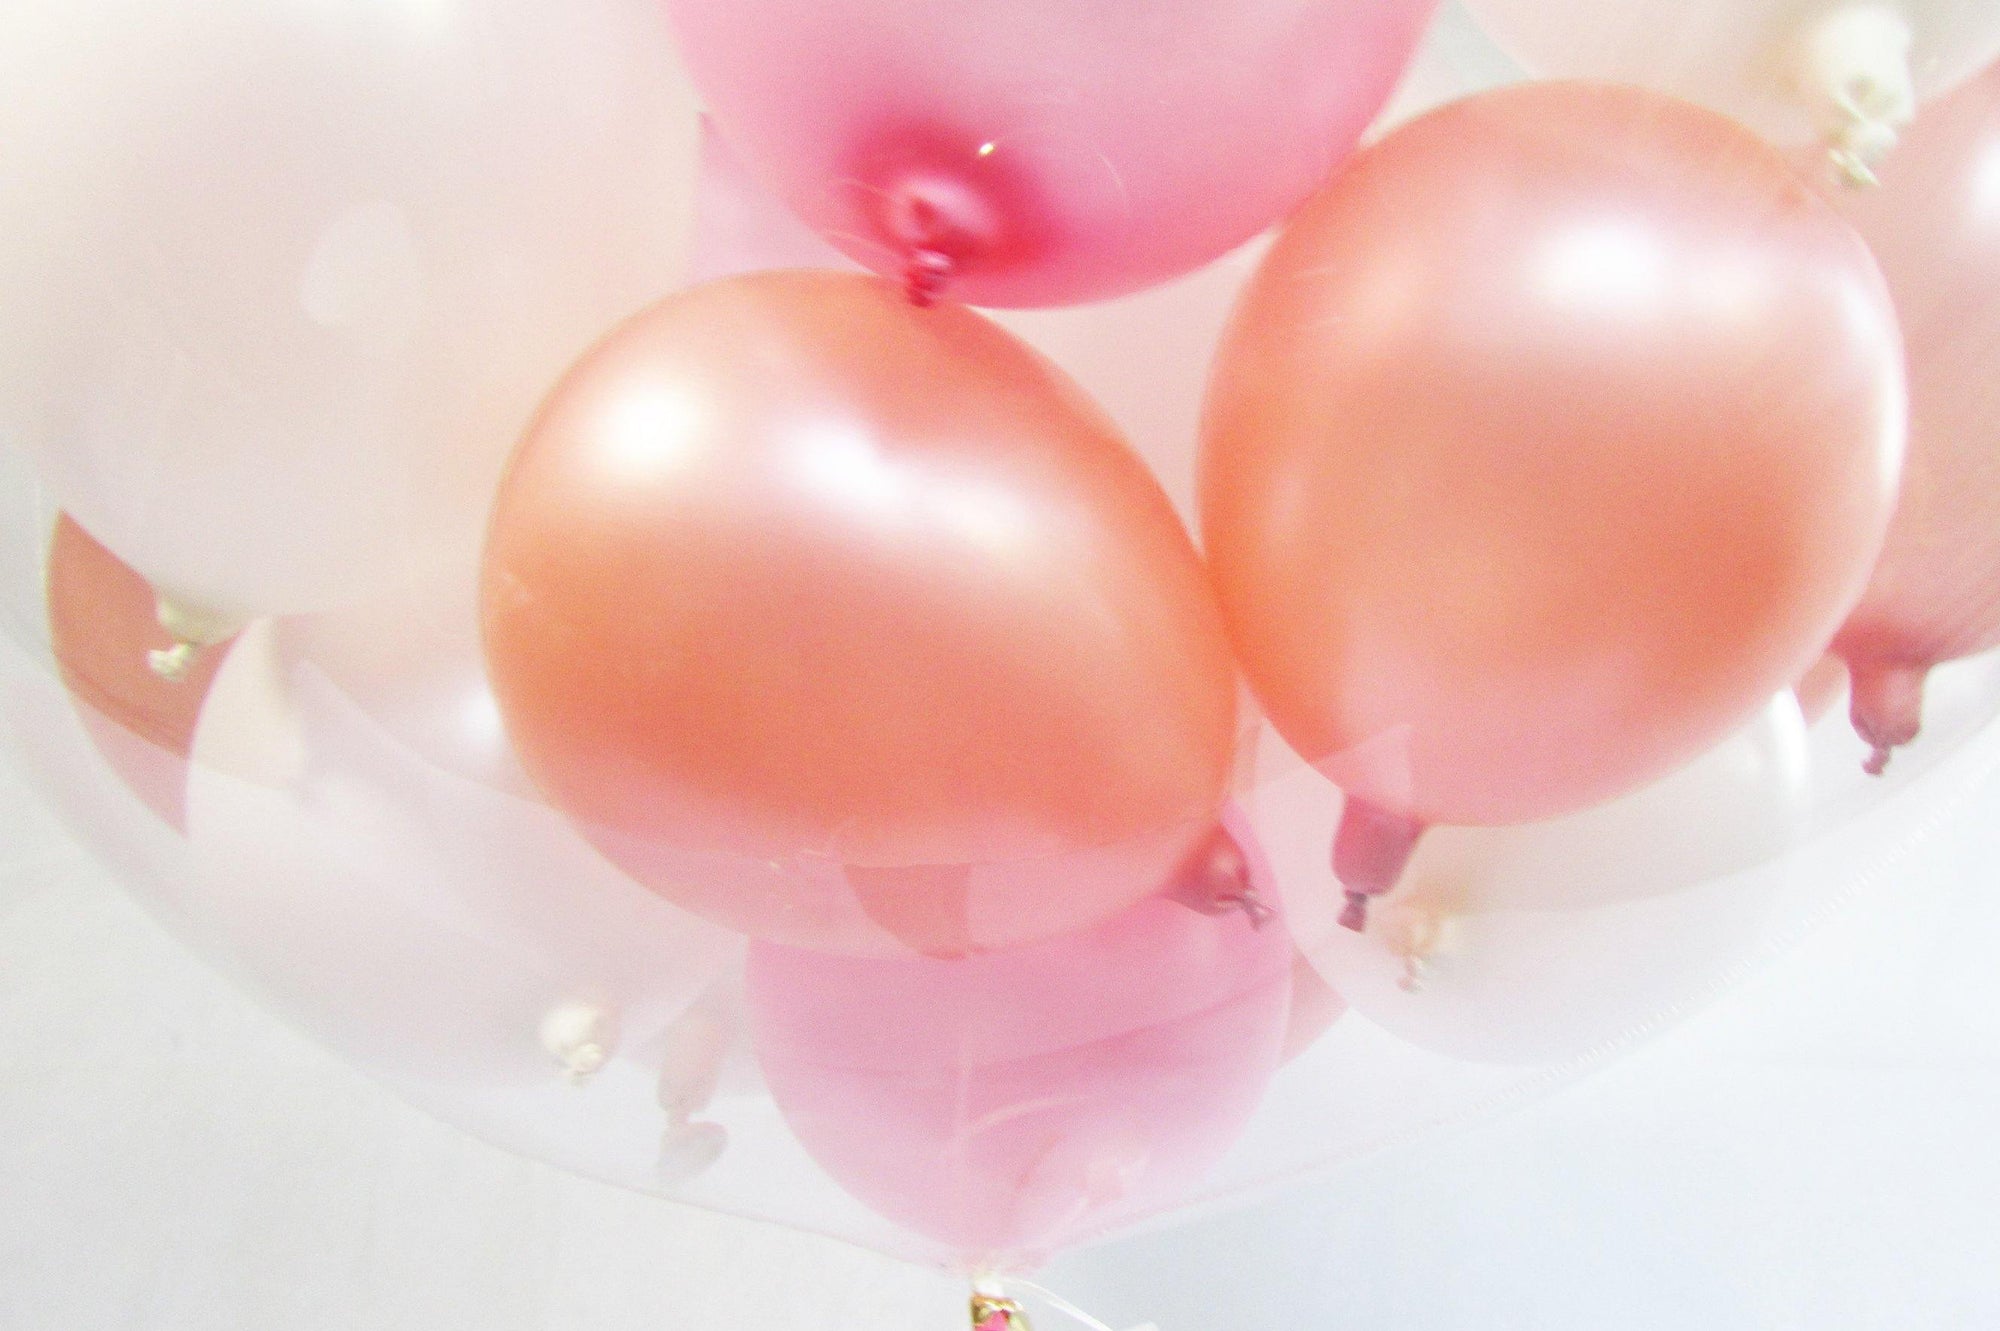 Balloons inside a Balloon - Bickiboo Designs